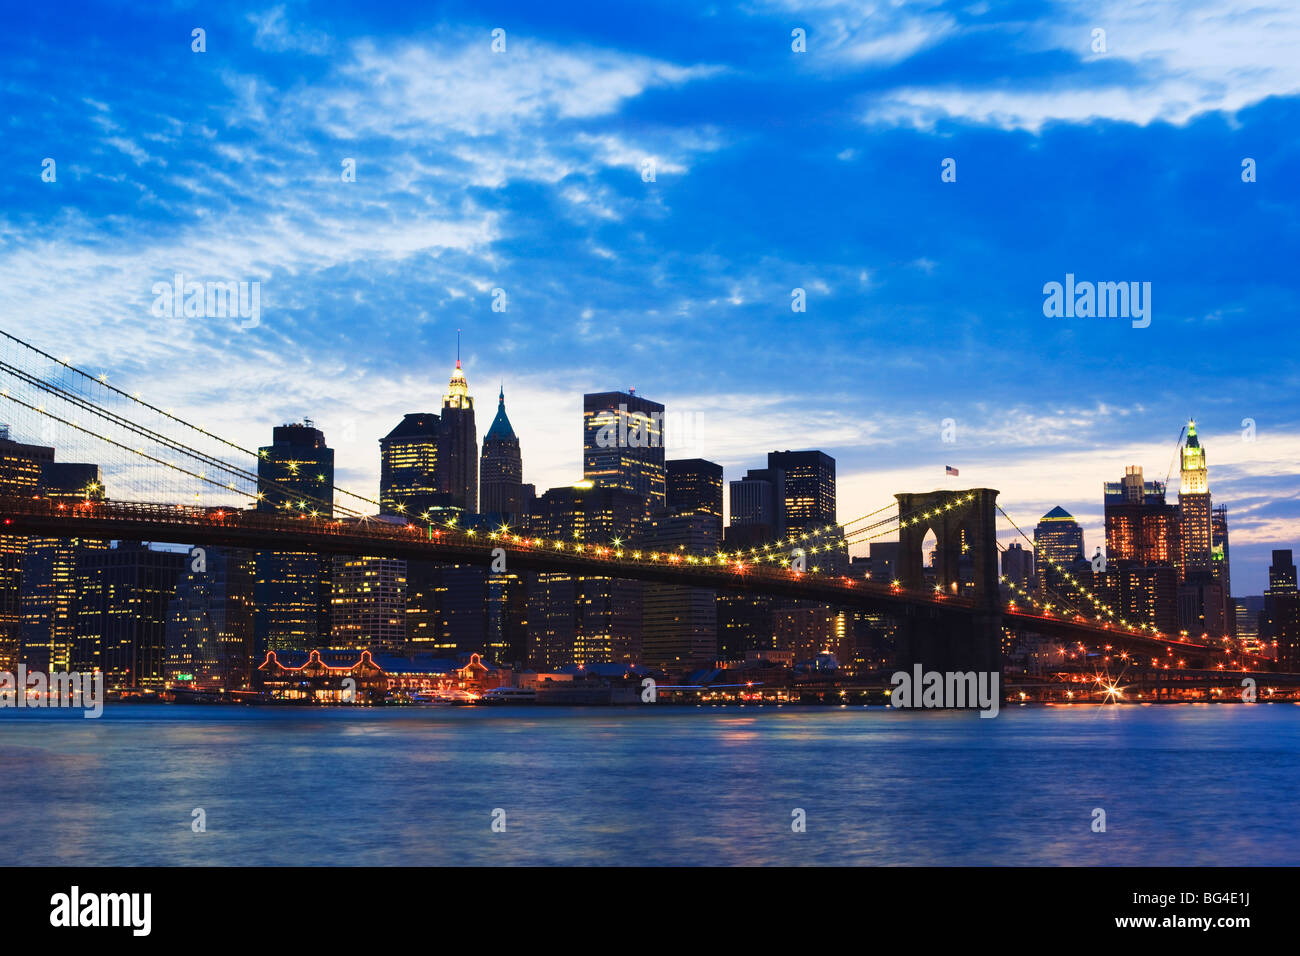 Brooklyn Bridge spanning the East River and the Lower Manhattan skyline at dusk, New York City, New York, USA Stock Photo